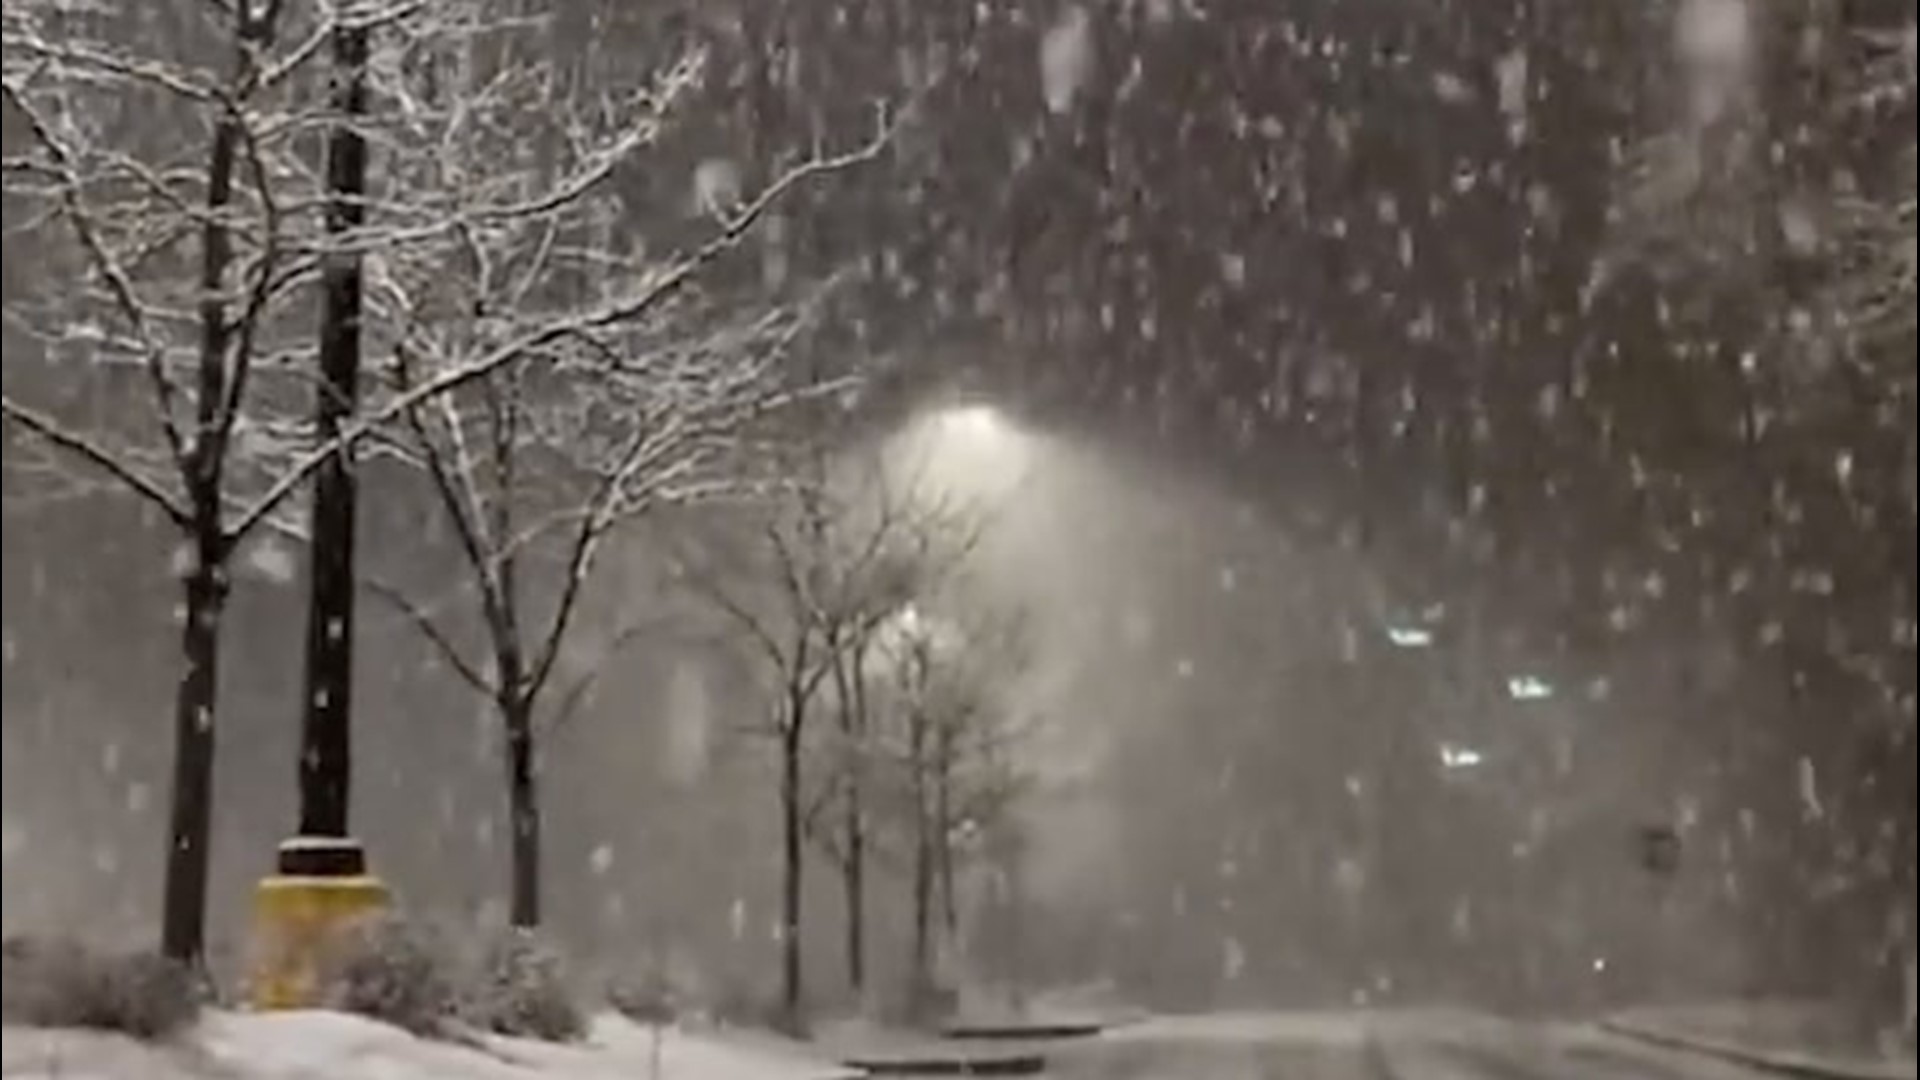 Heavy snow fell on the city of Logan, Utah, on Jan. 23, creating a stunning, late-night winter scene.